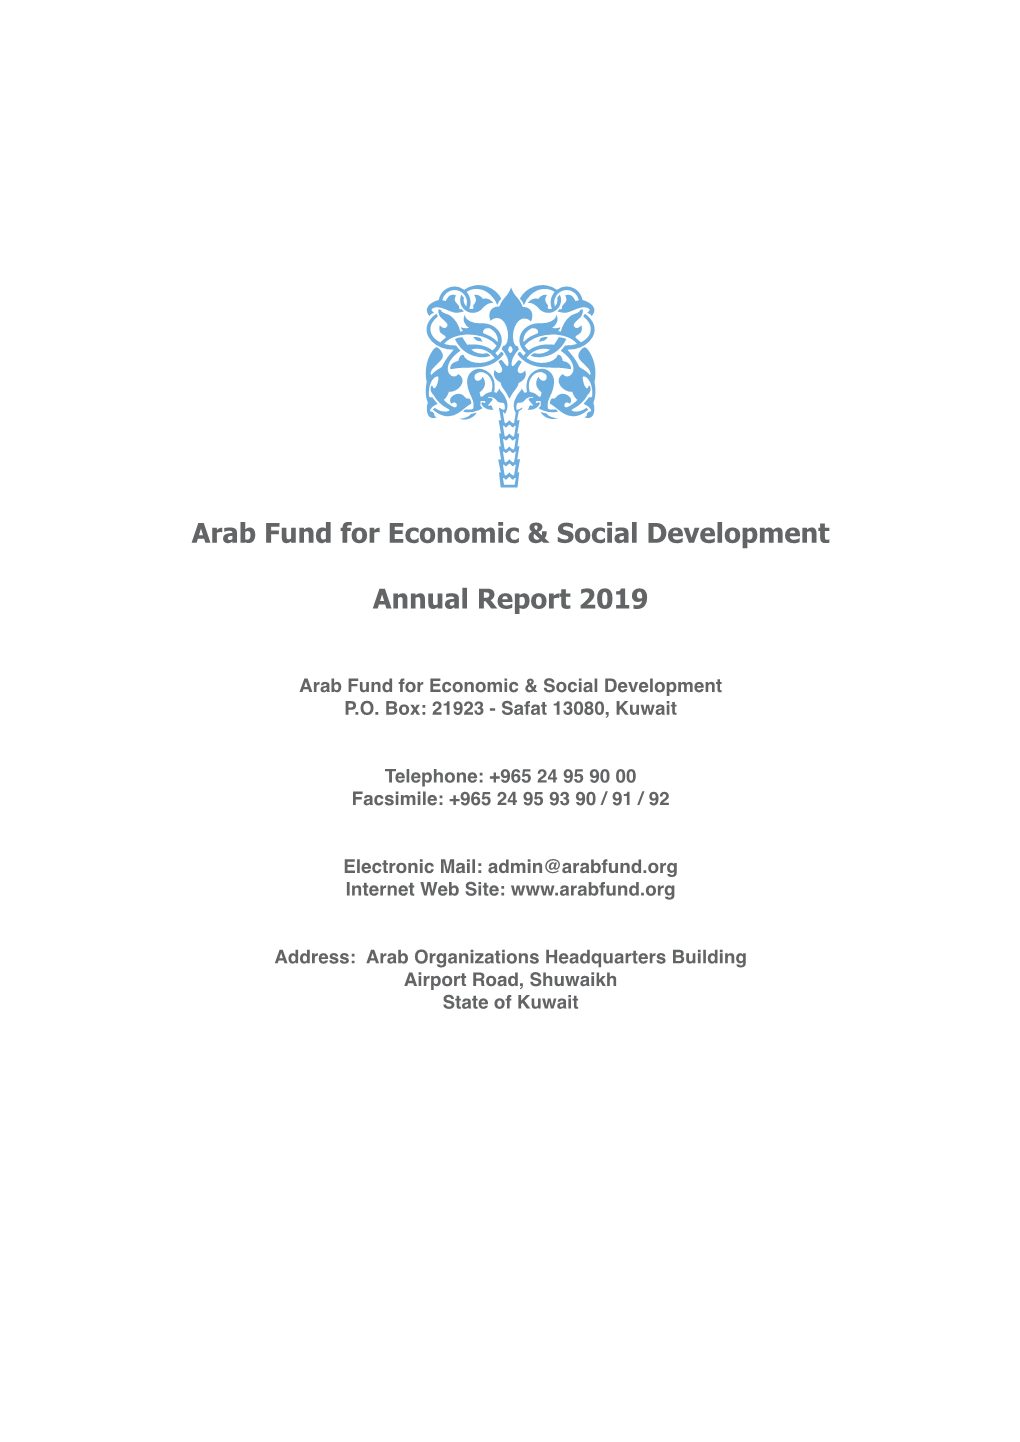 Arab Fund for Economic & Social Development Annual Report 2019